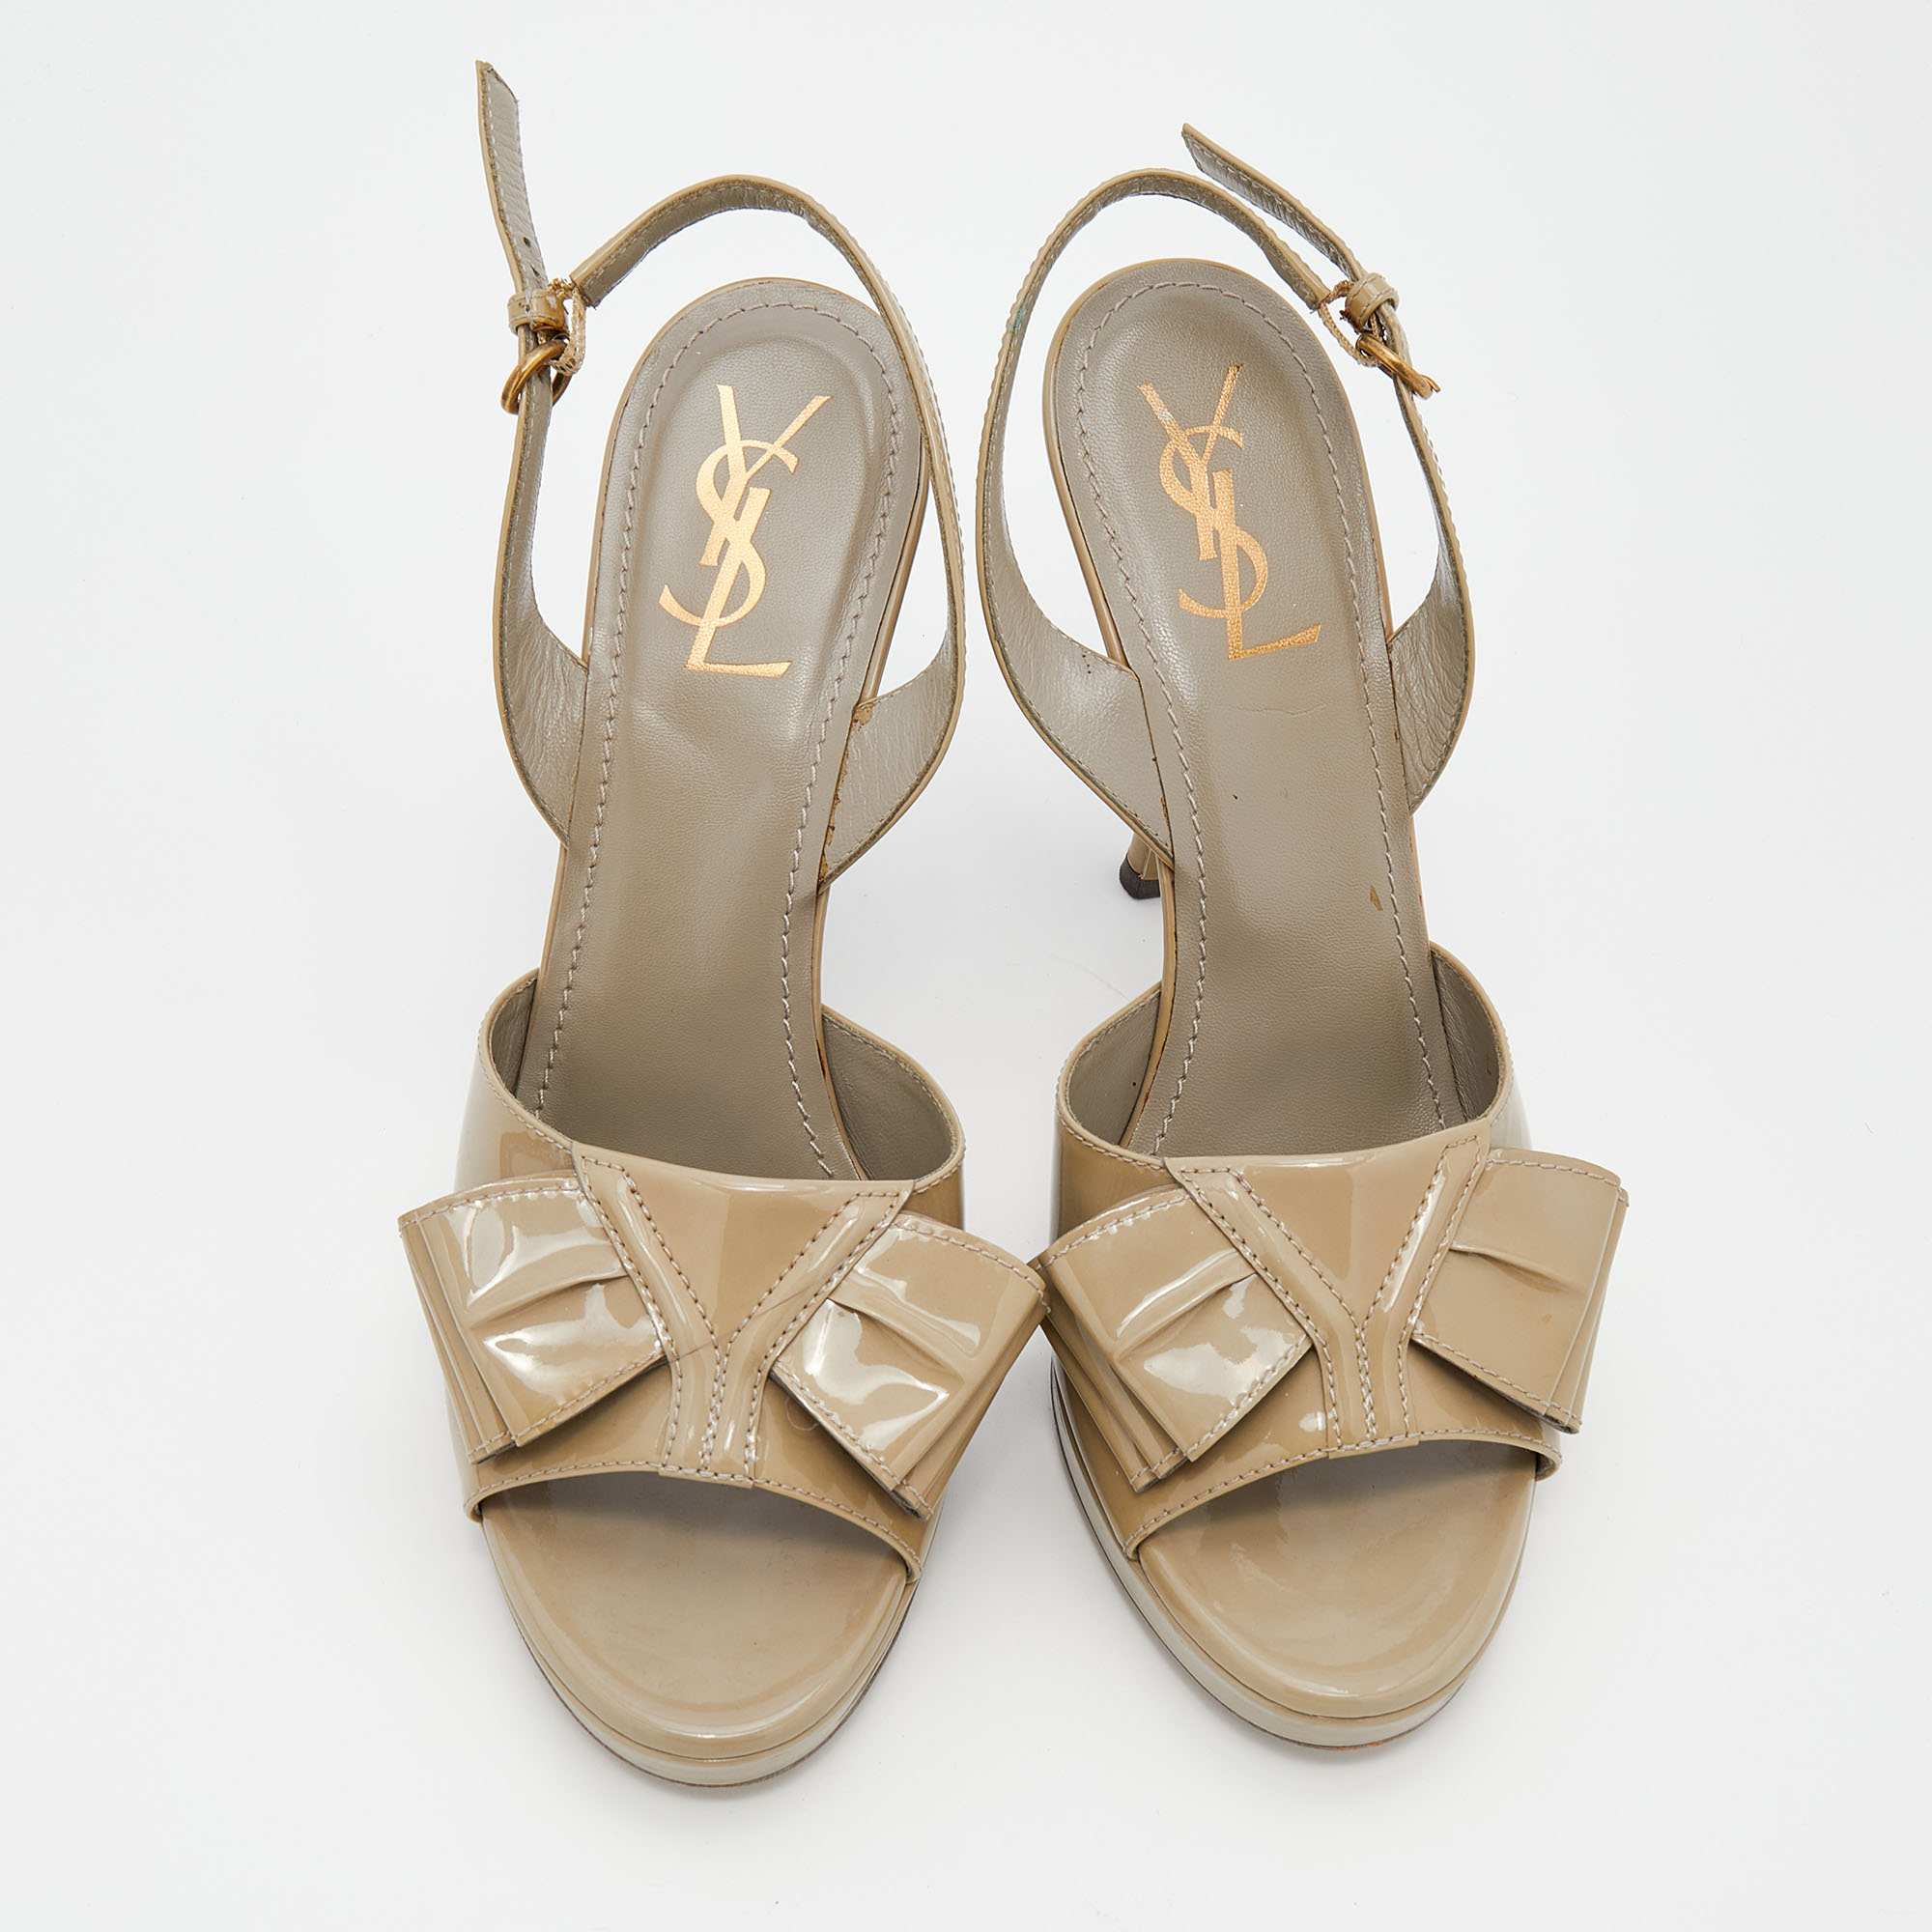 Yves Saint Laurent Olive Green Patent Leather Bow Platform Slingback Sandals Size 40